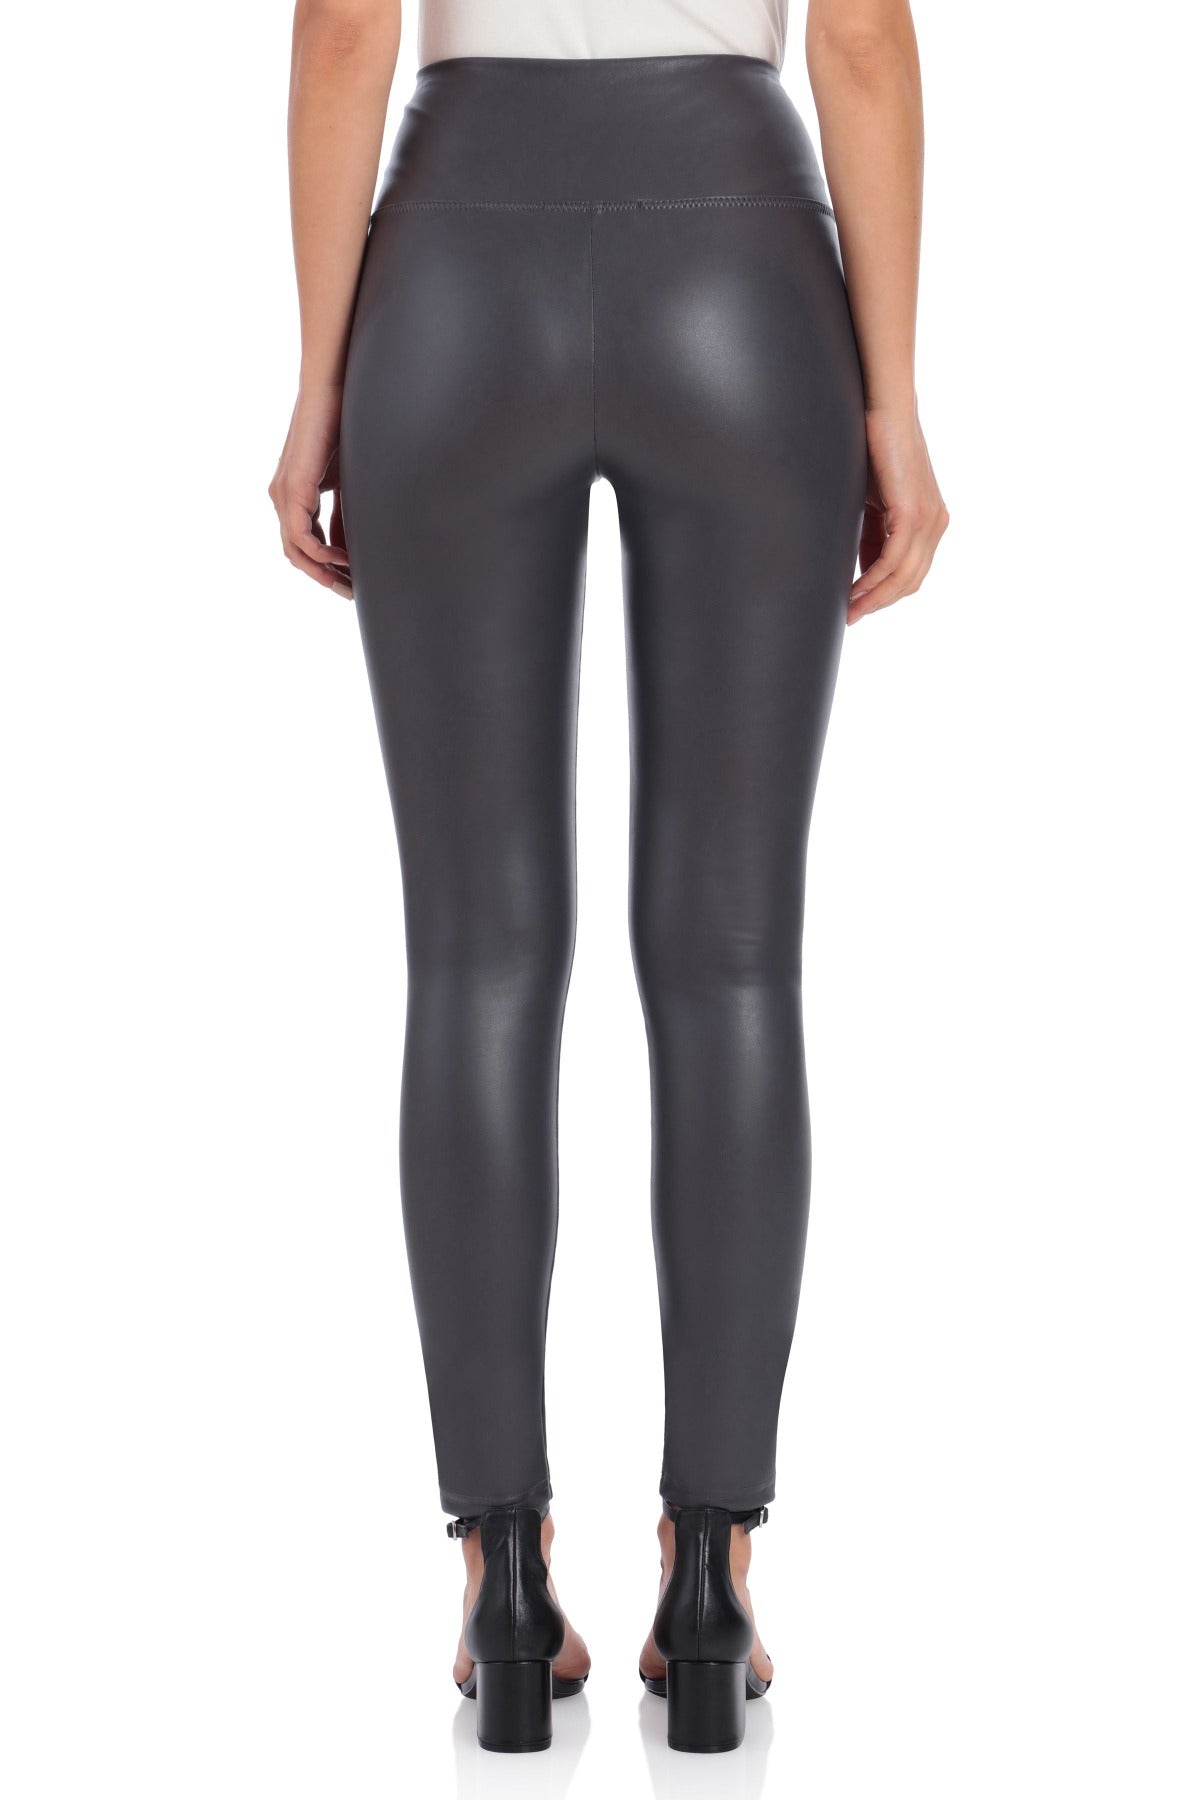 Kamo Women's Black Faux Leather Pants High Waist Leather Leggings with Thin Fleece  Lined - Walmart.com